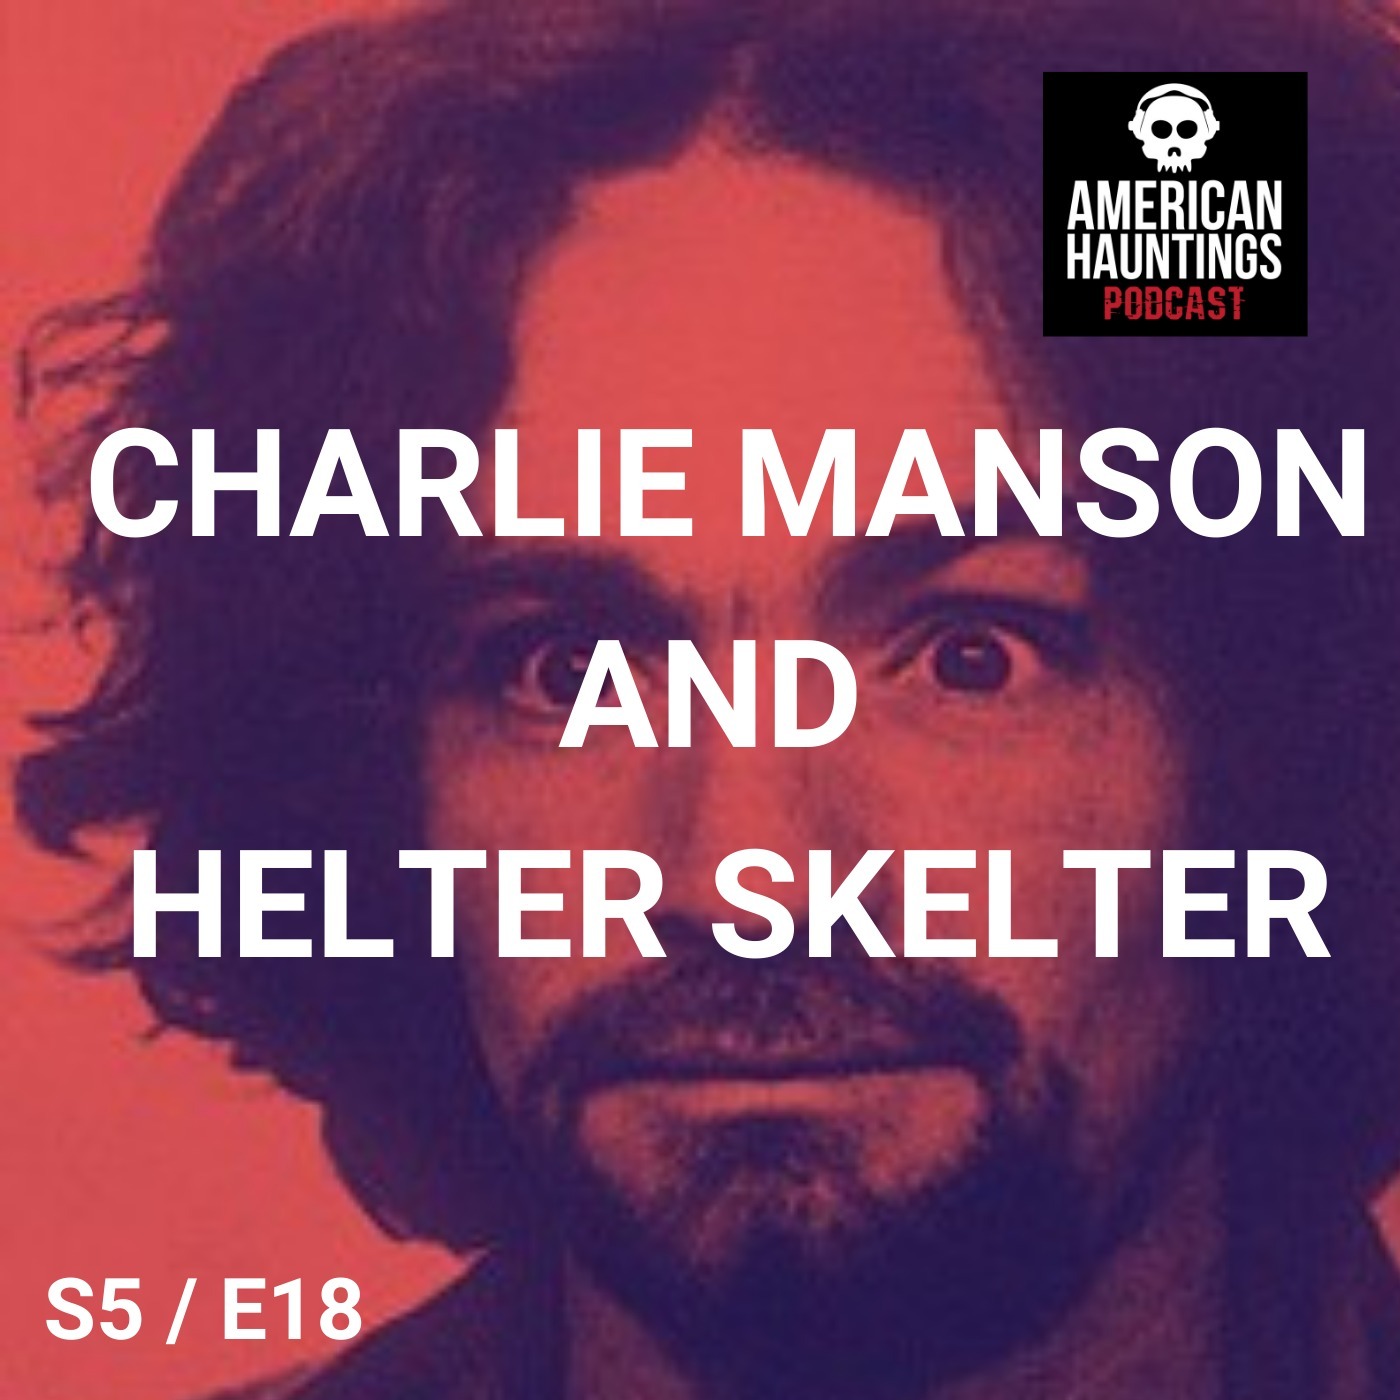 Charles Manson and Helter Skelter